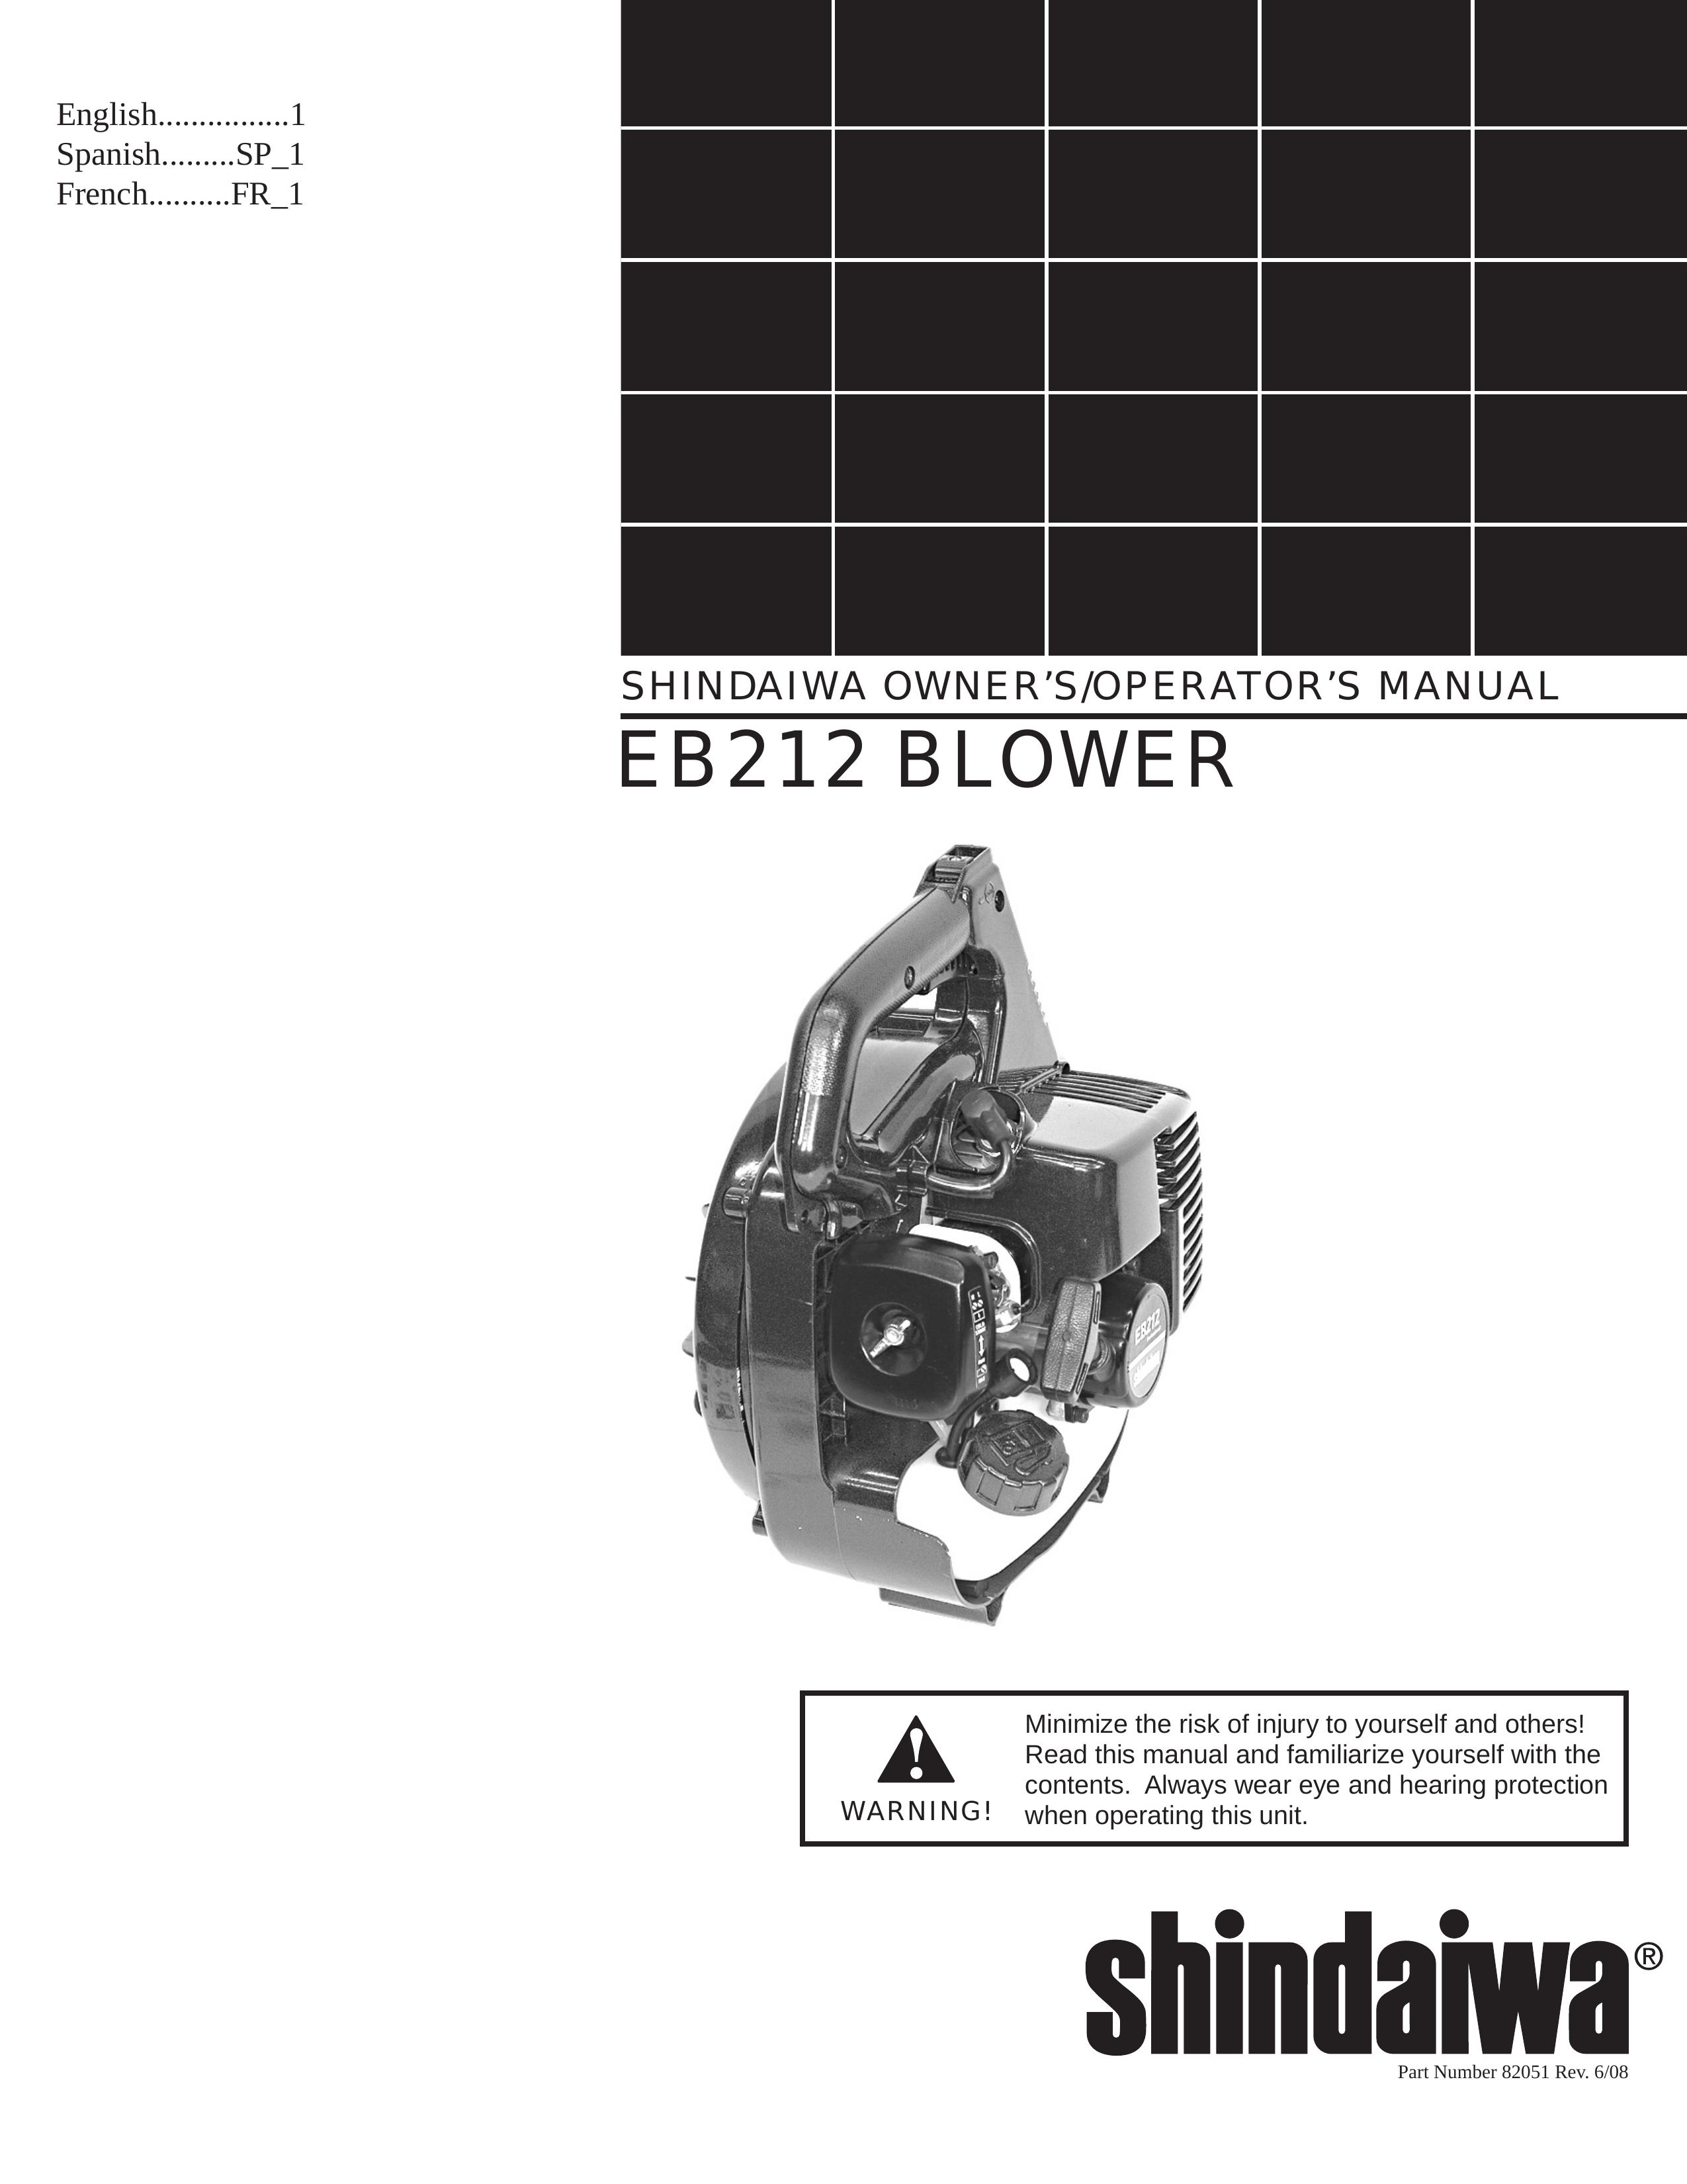 Shindaiwa EB212 Blower User Manual